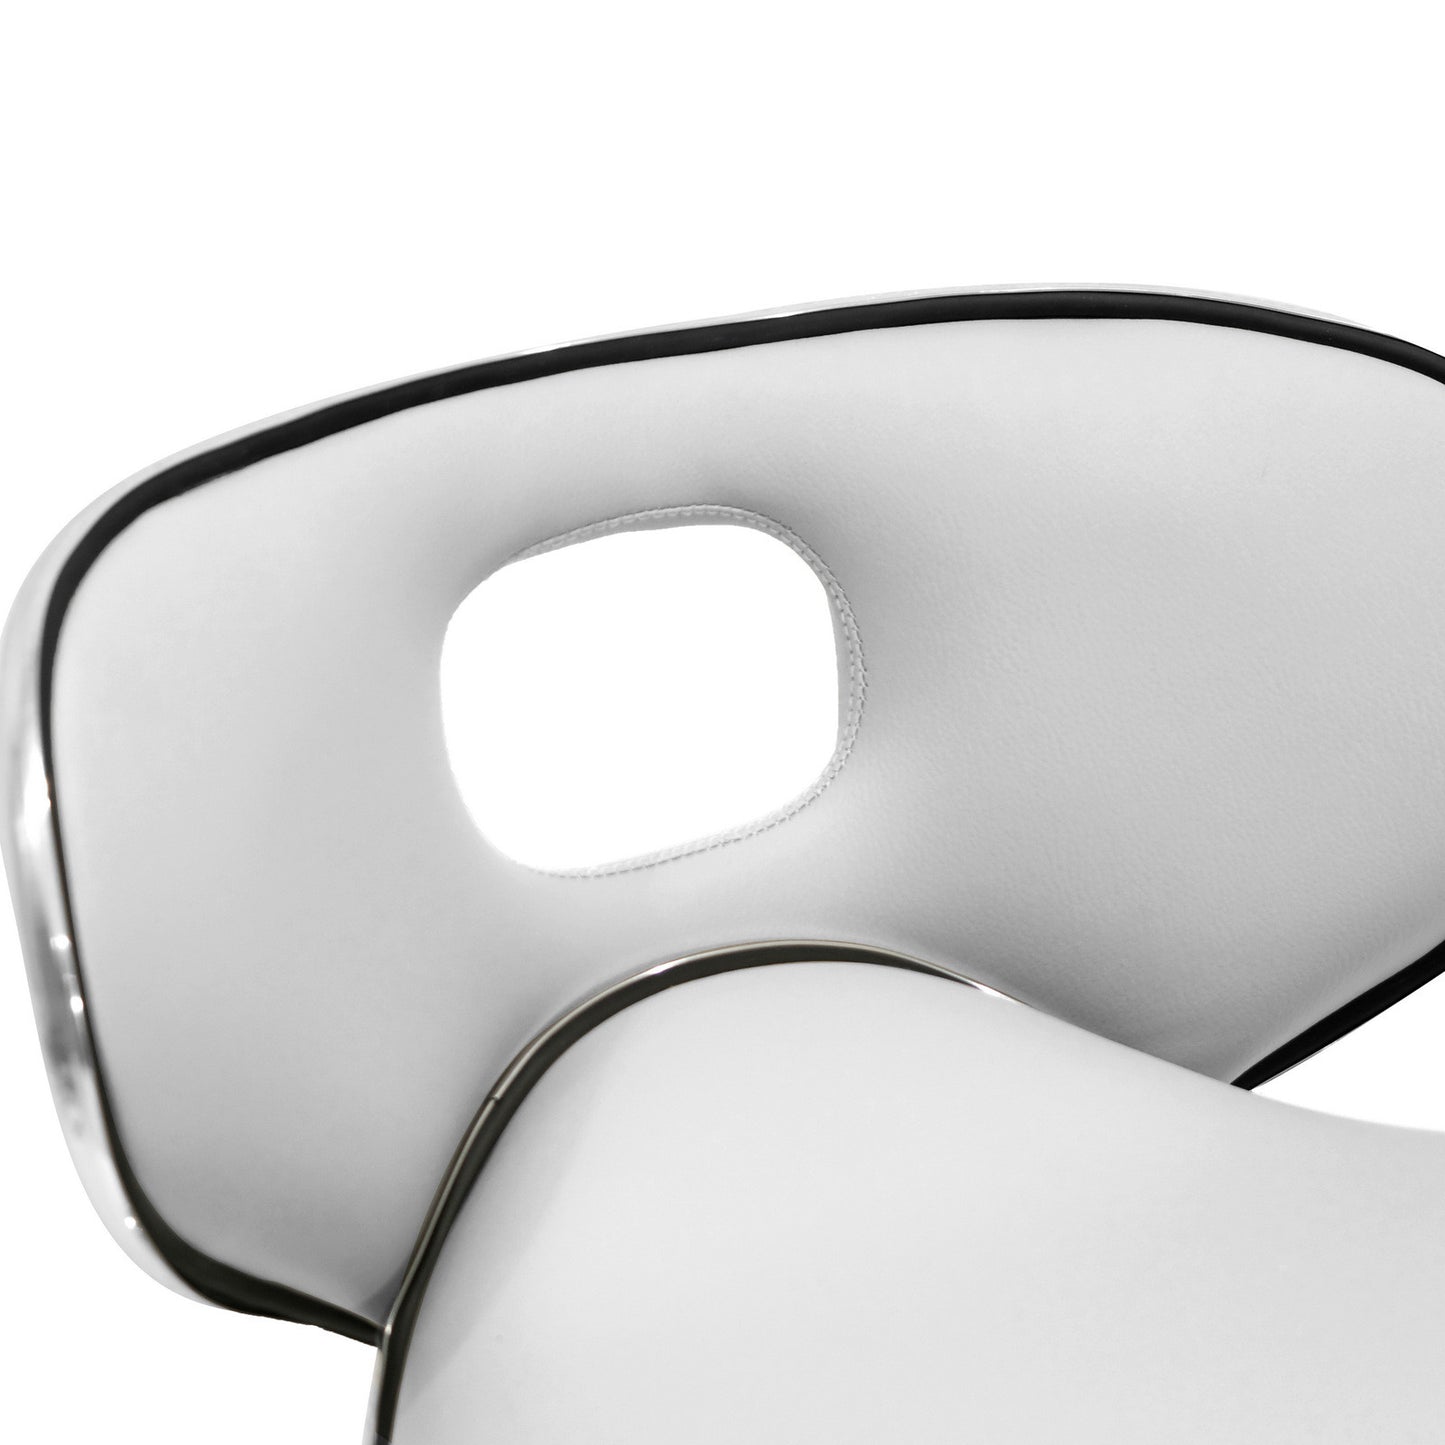 Adria White PU Leather Chrome Frame Adjustable Height Swivel Bar Stool (Set of 2)